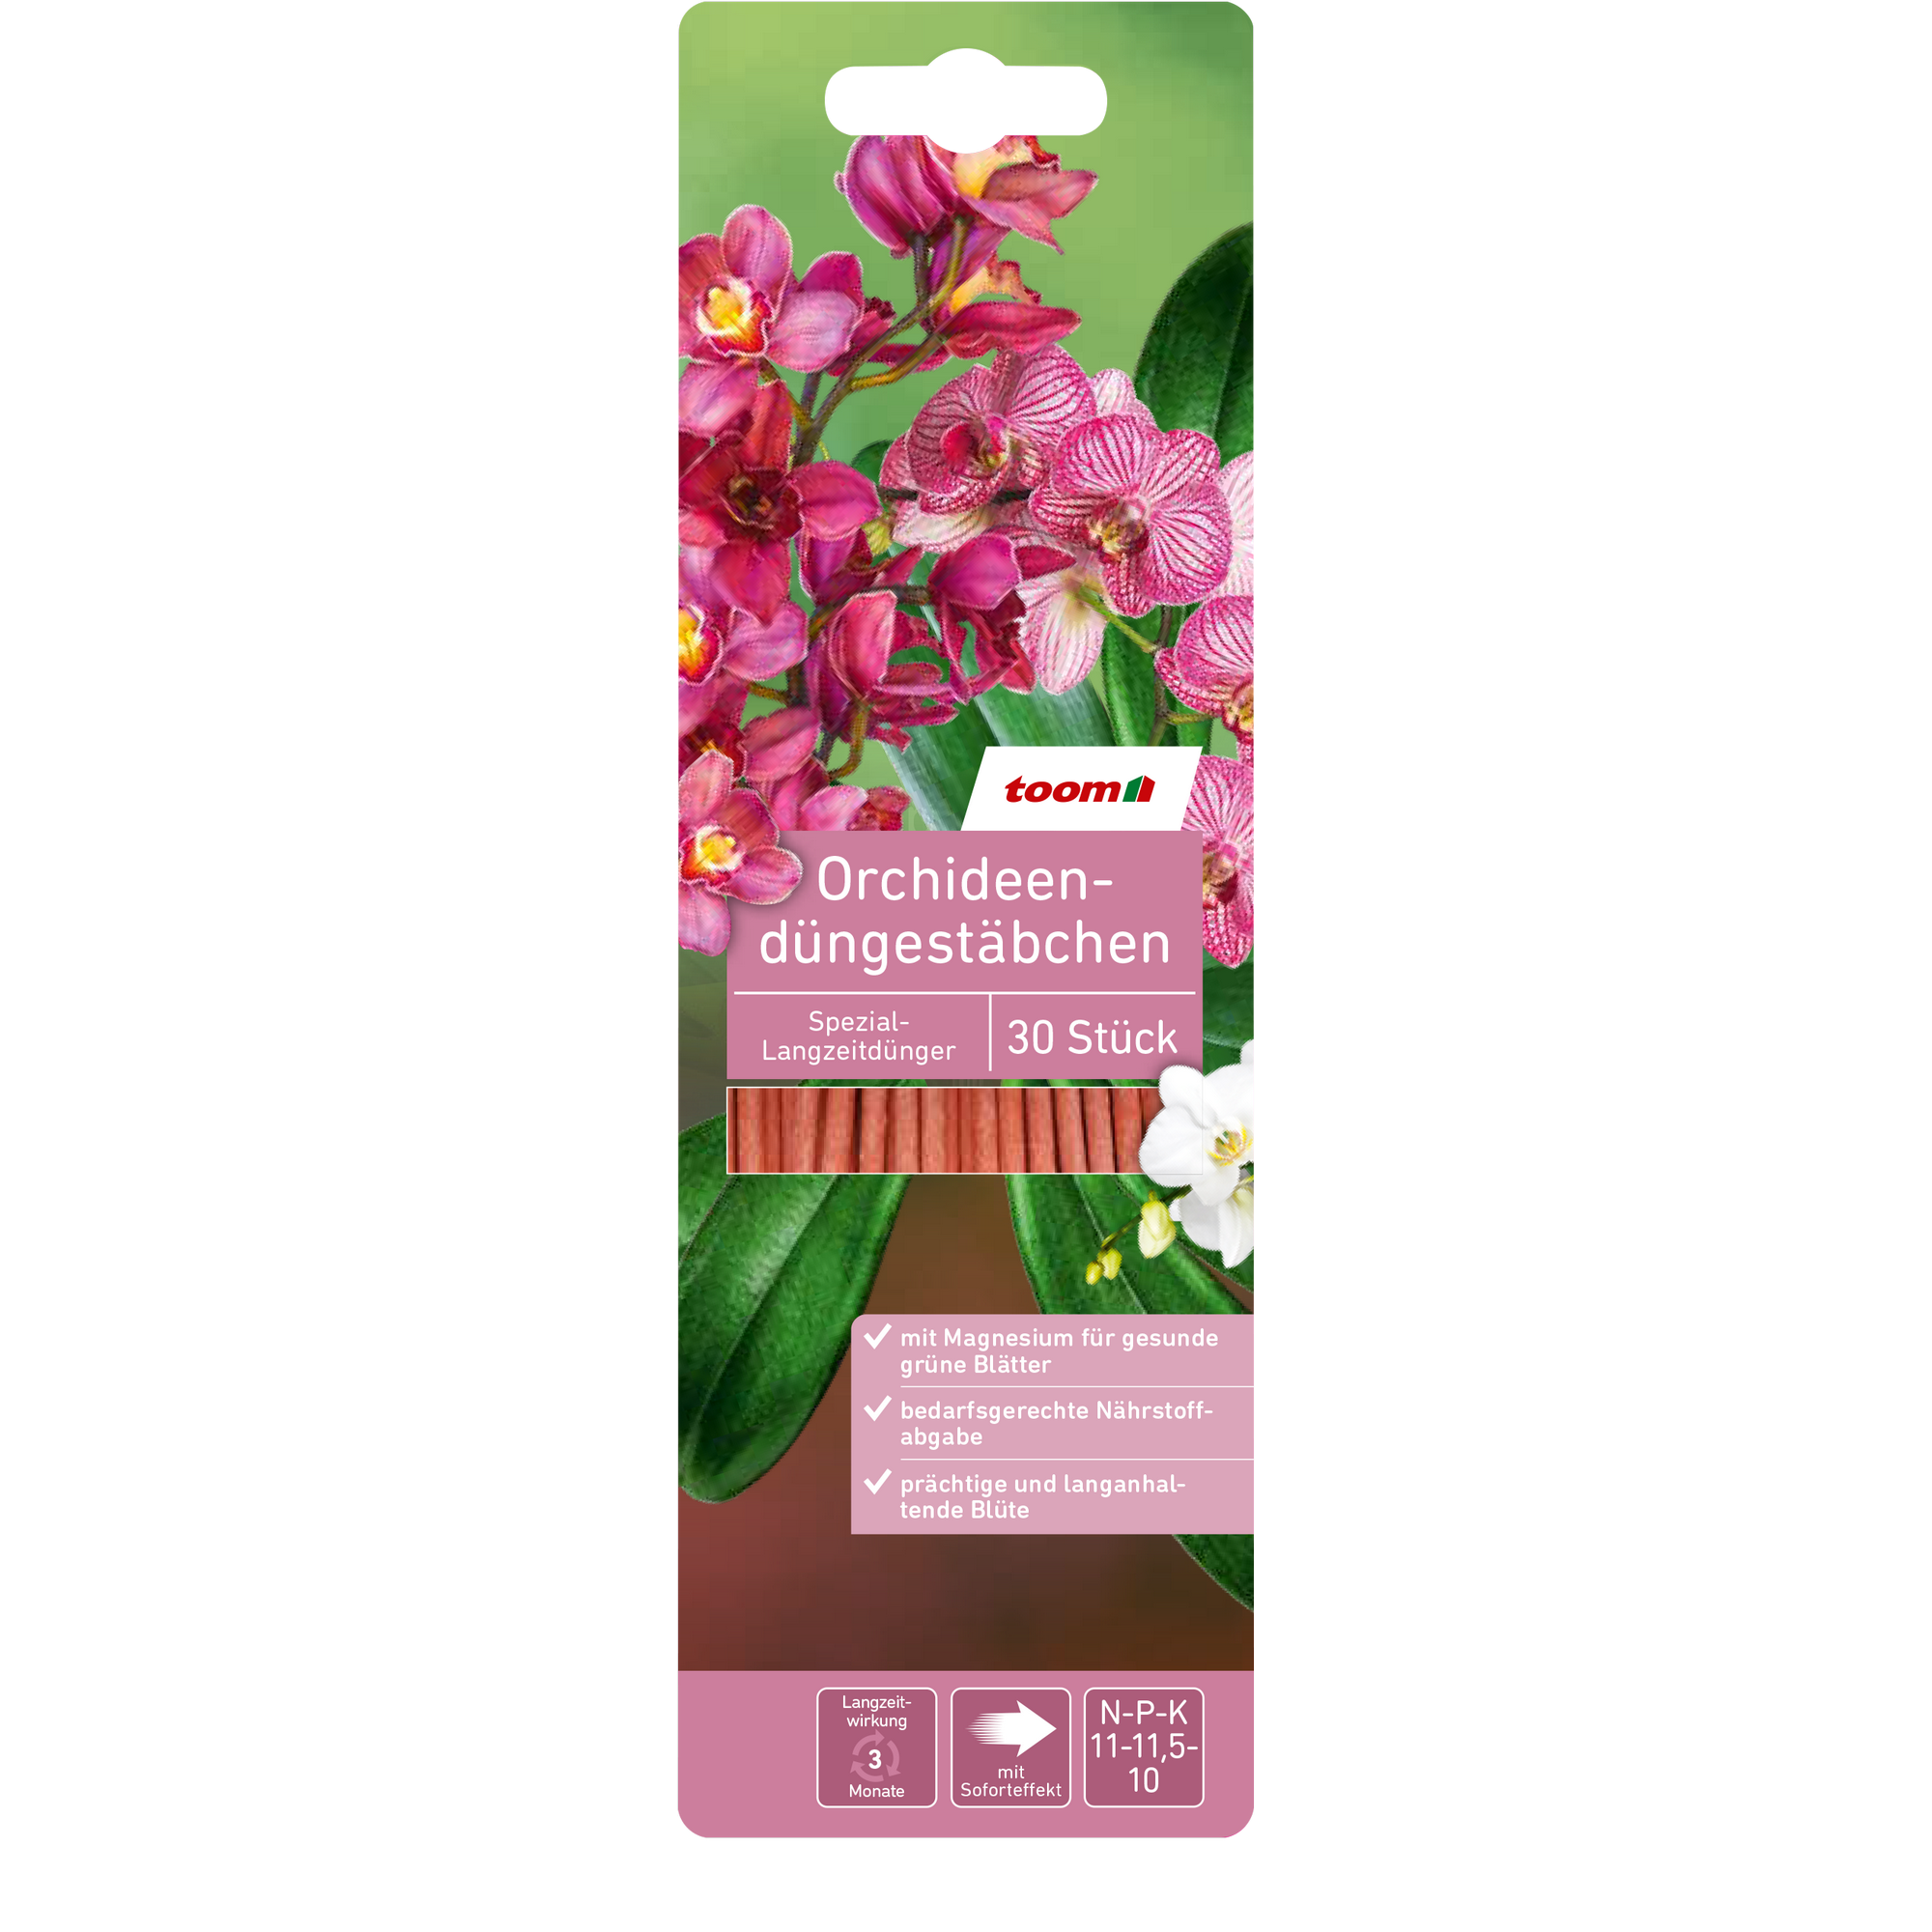 Orchideendüngestäbchen 30 Stück + product picture